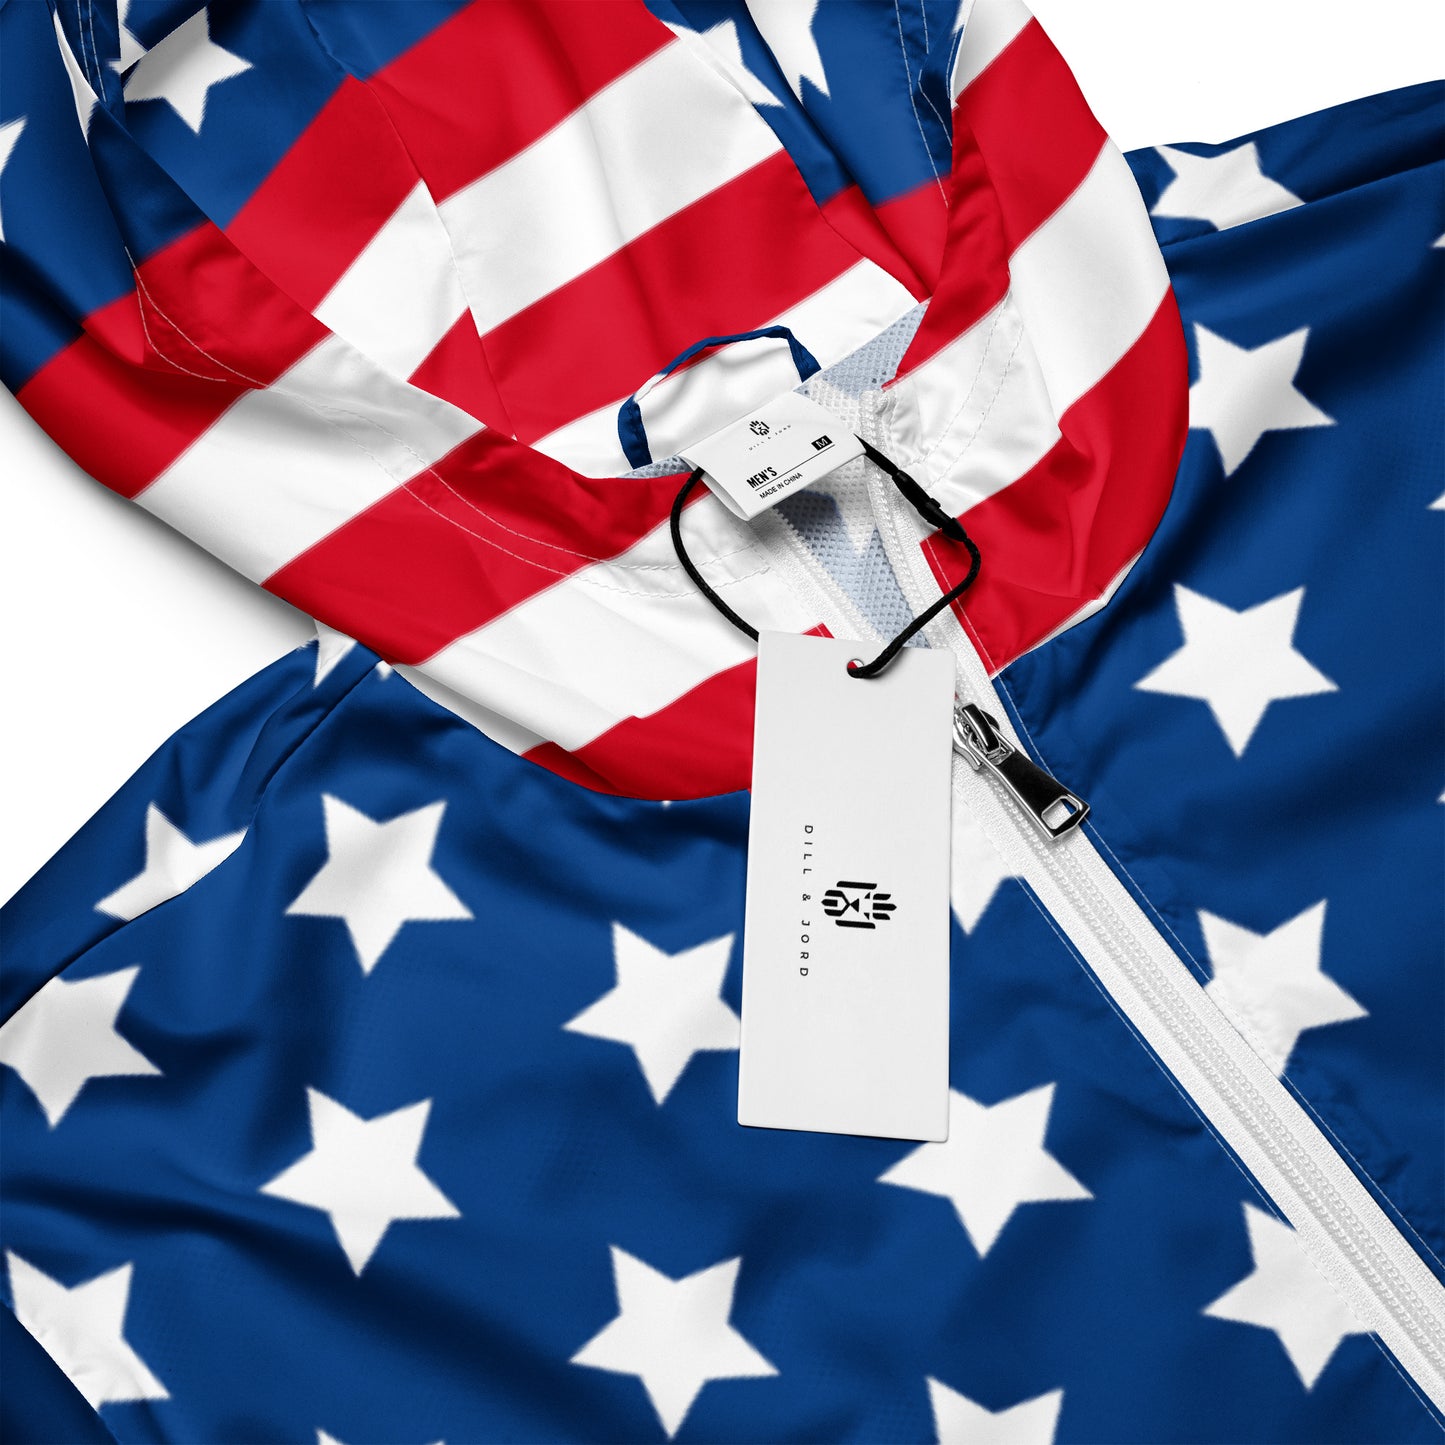 Men's American Flag Windbreaker Jacket